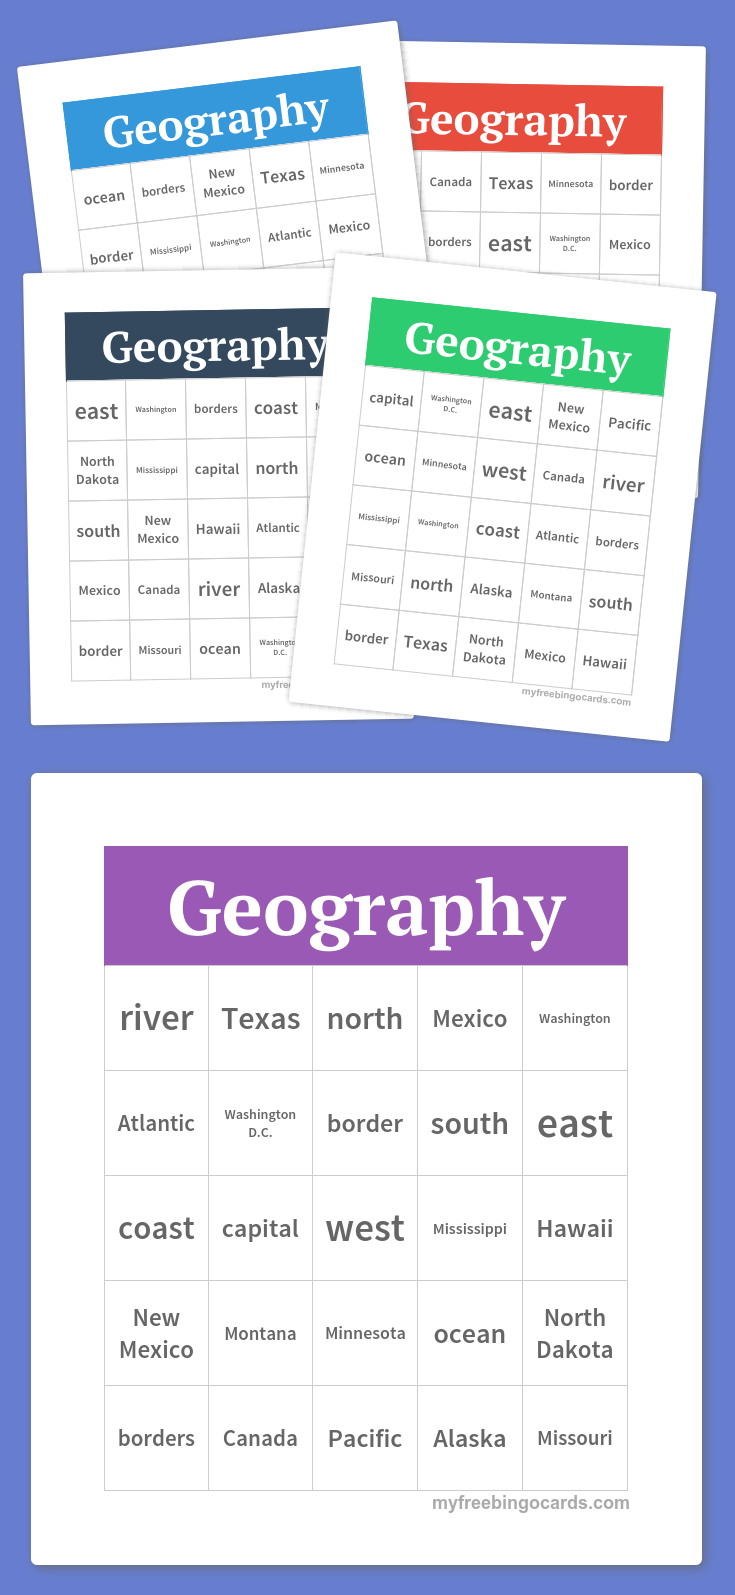 Geography Bingo | Free Printable Bingo Cards, Free Bingo